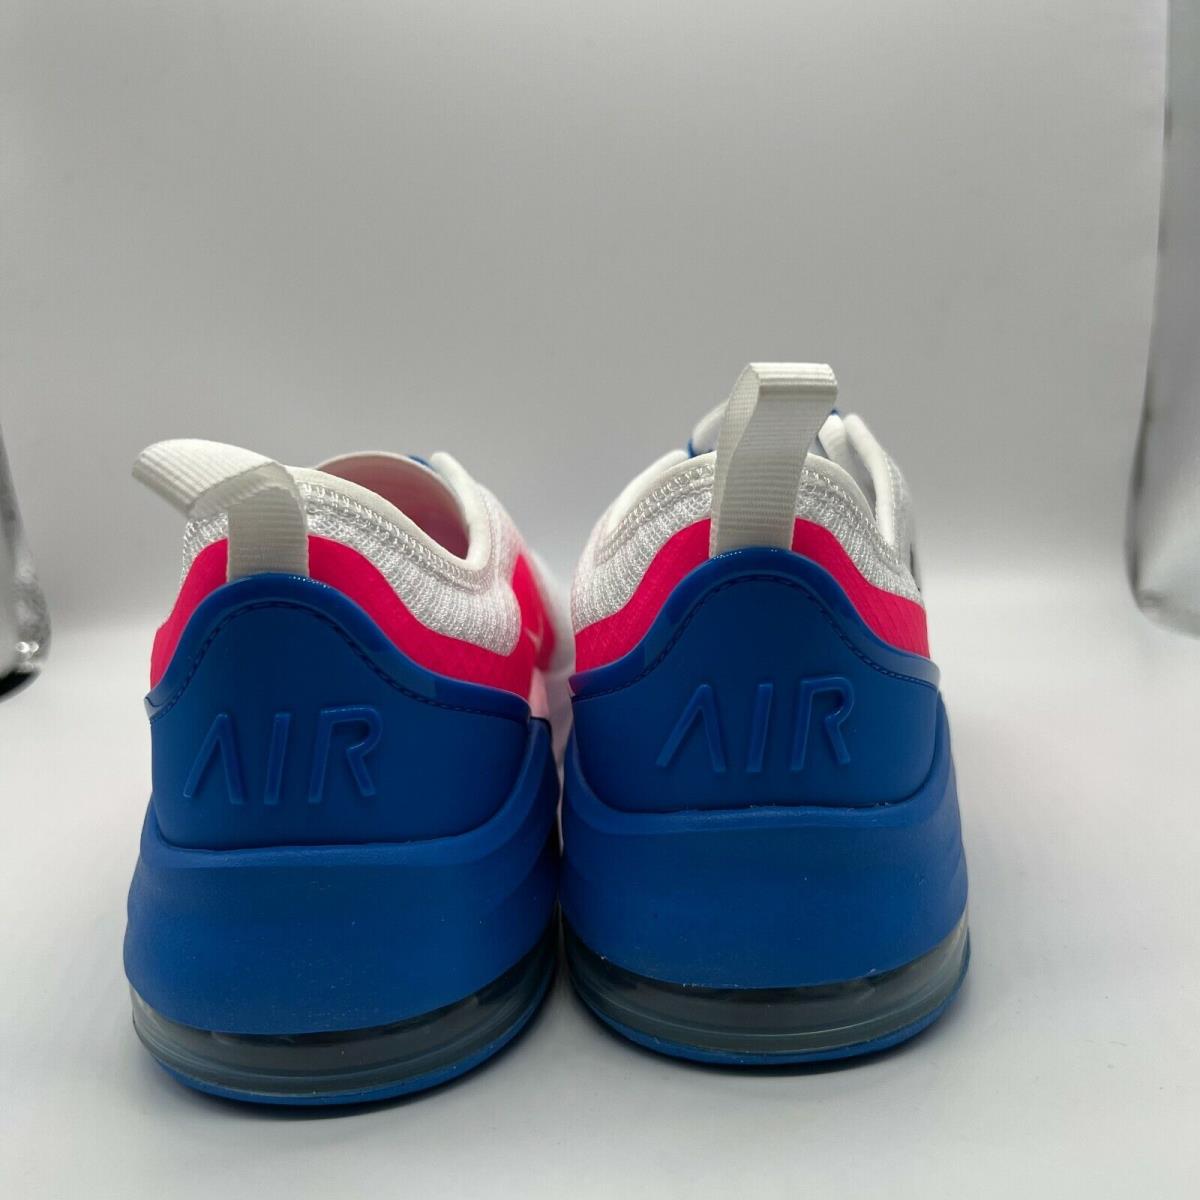 Nike shoes Sneaker Shoes - Multicolor 3